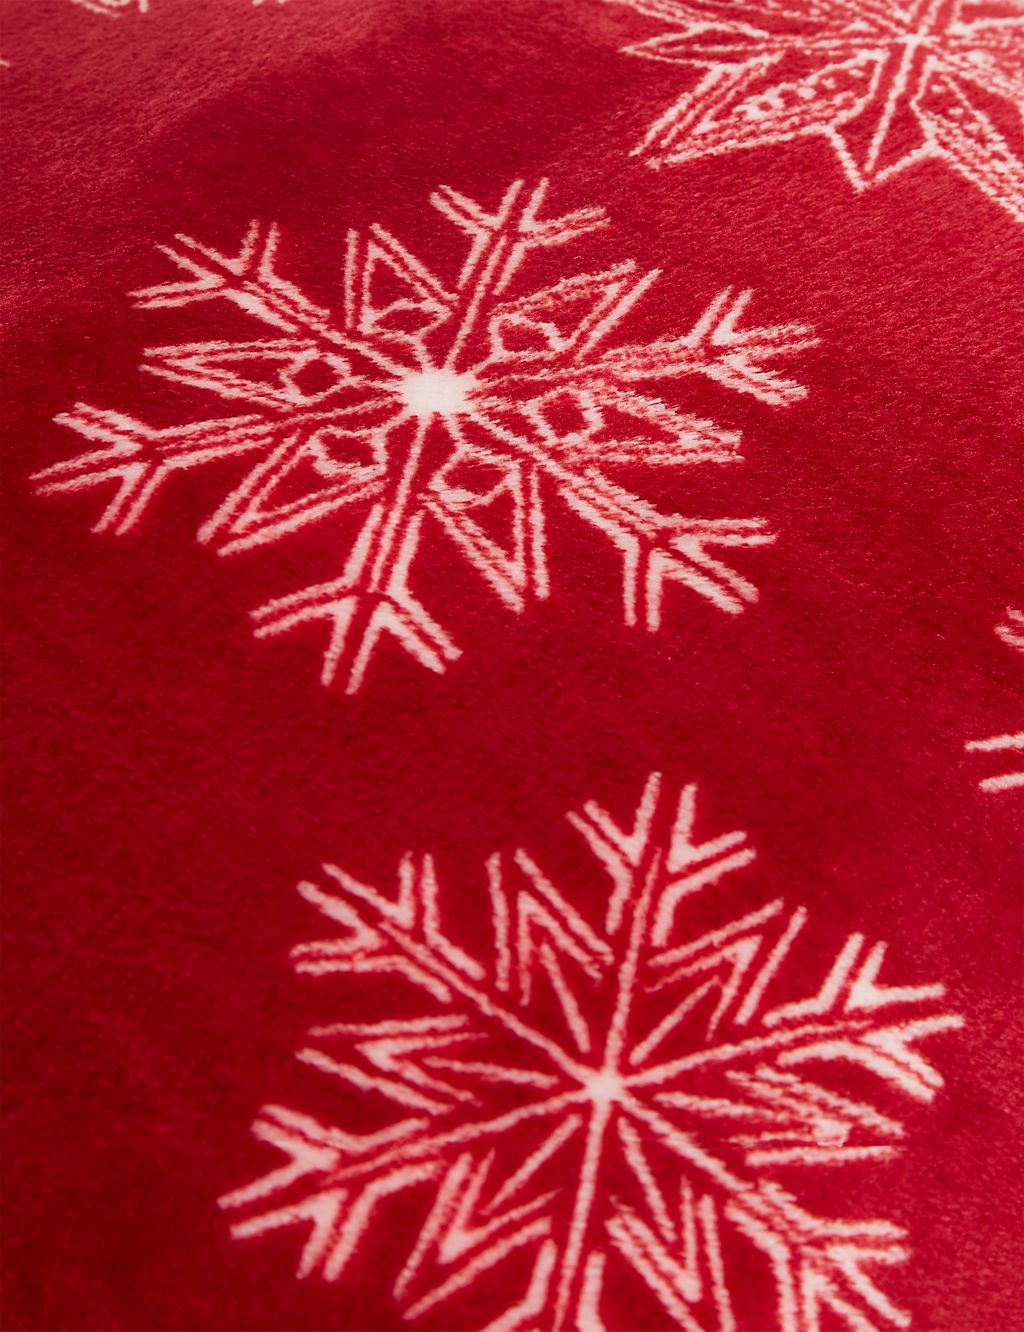 Fleece Snowflake Medium Christmas Cushion 1 of 4